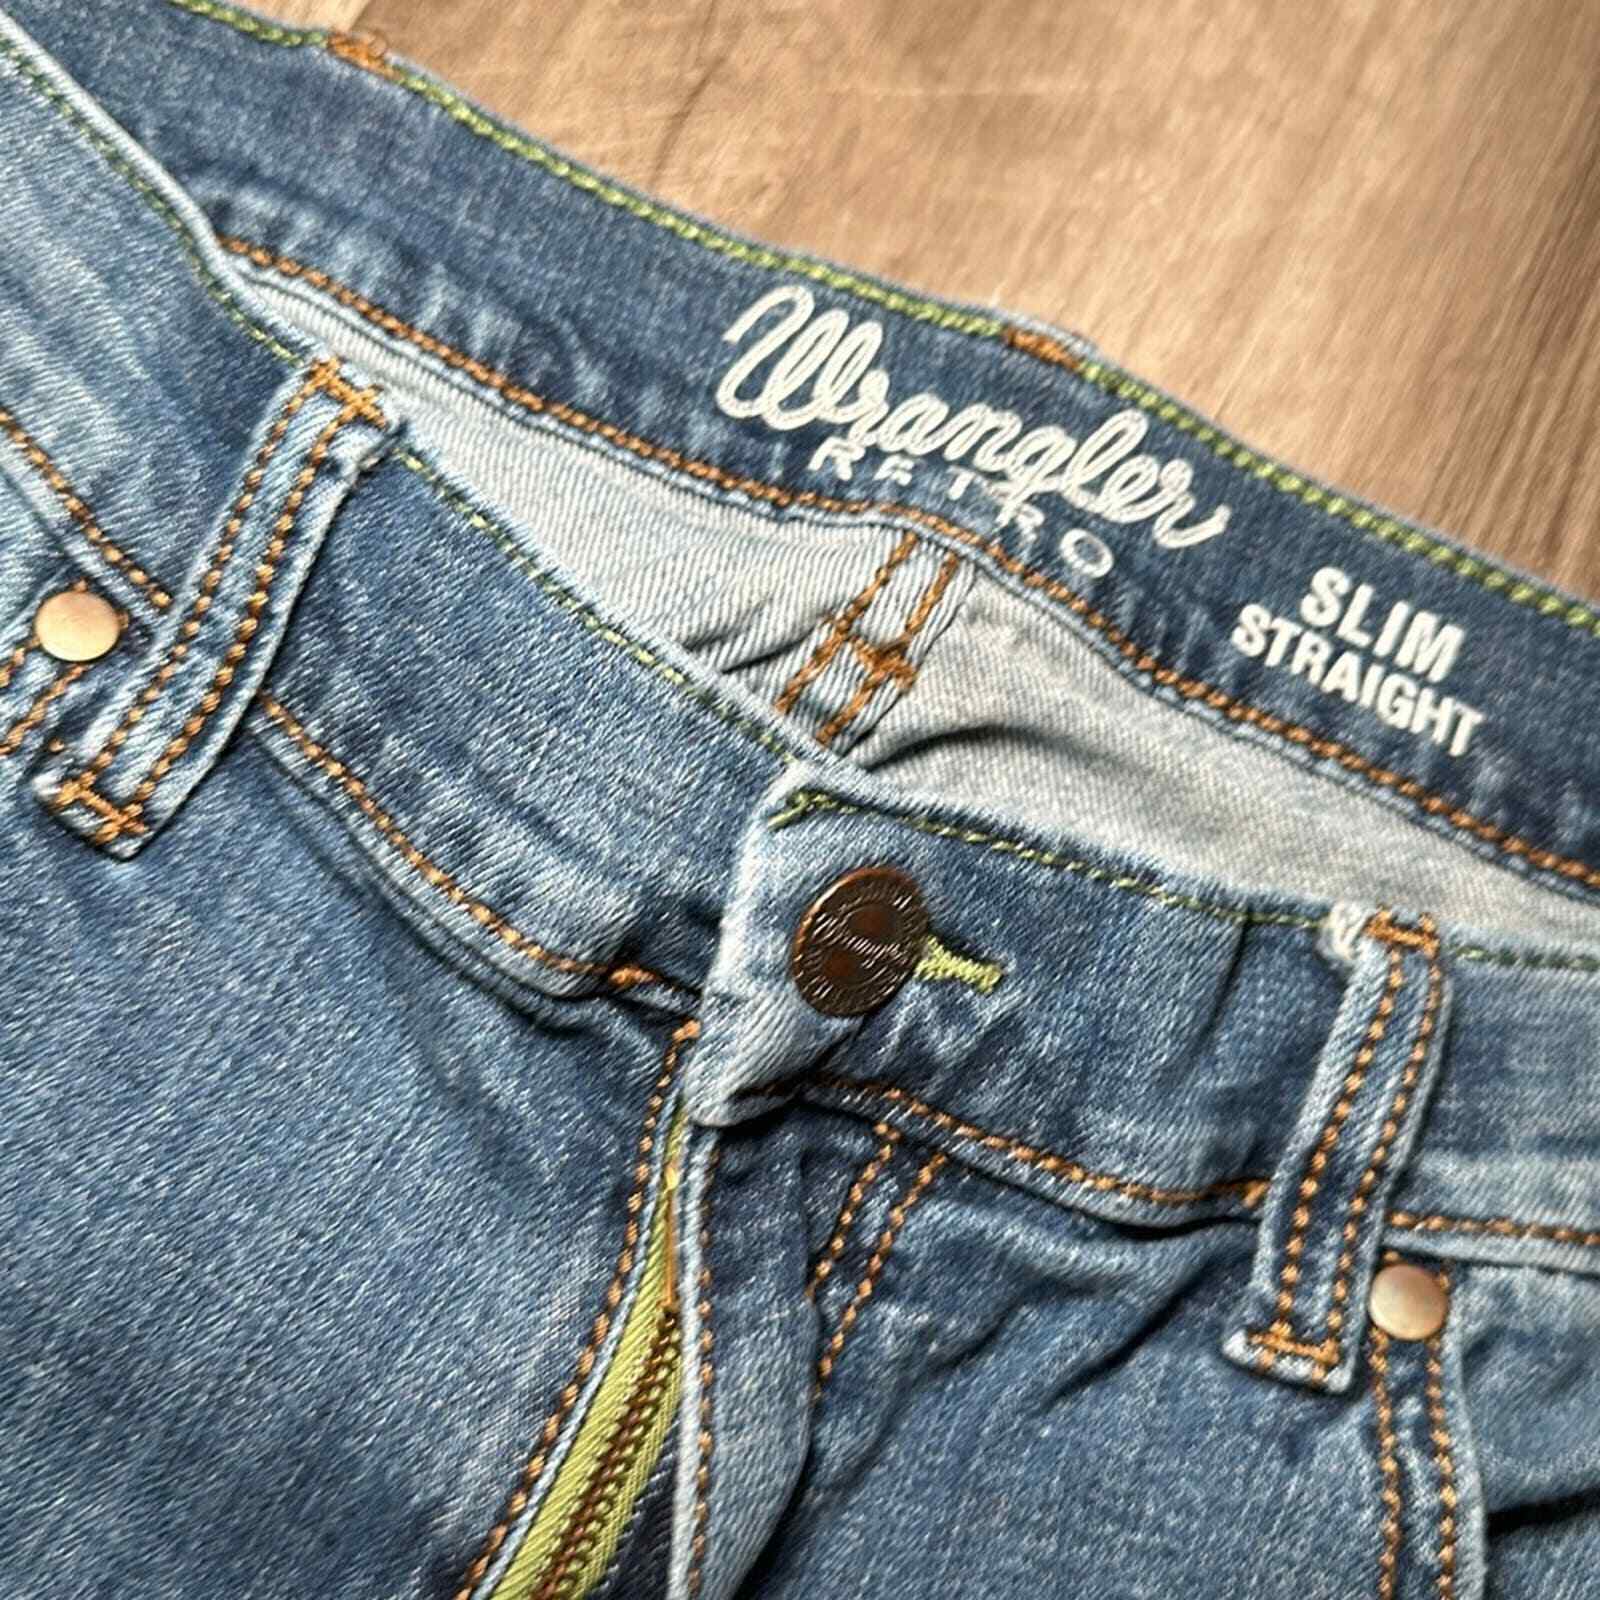 Wrangler Retro Slim Straight Jeans - 36x30 - image 7